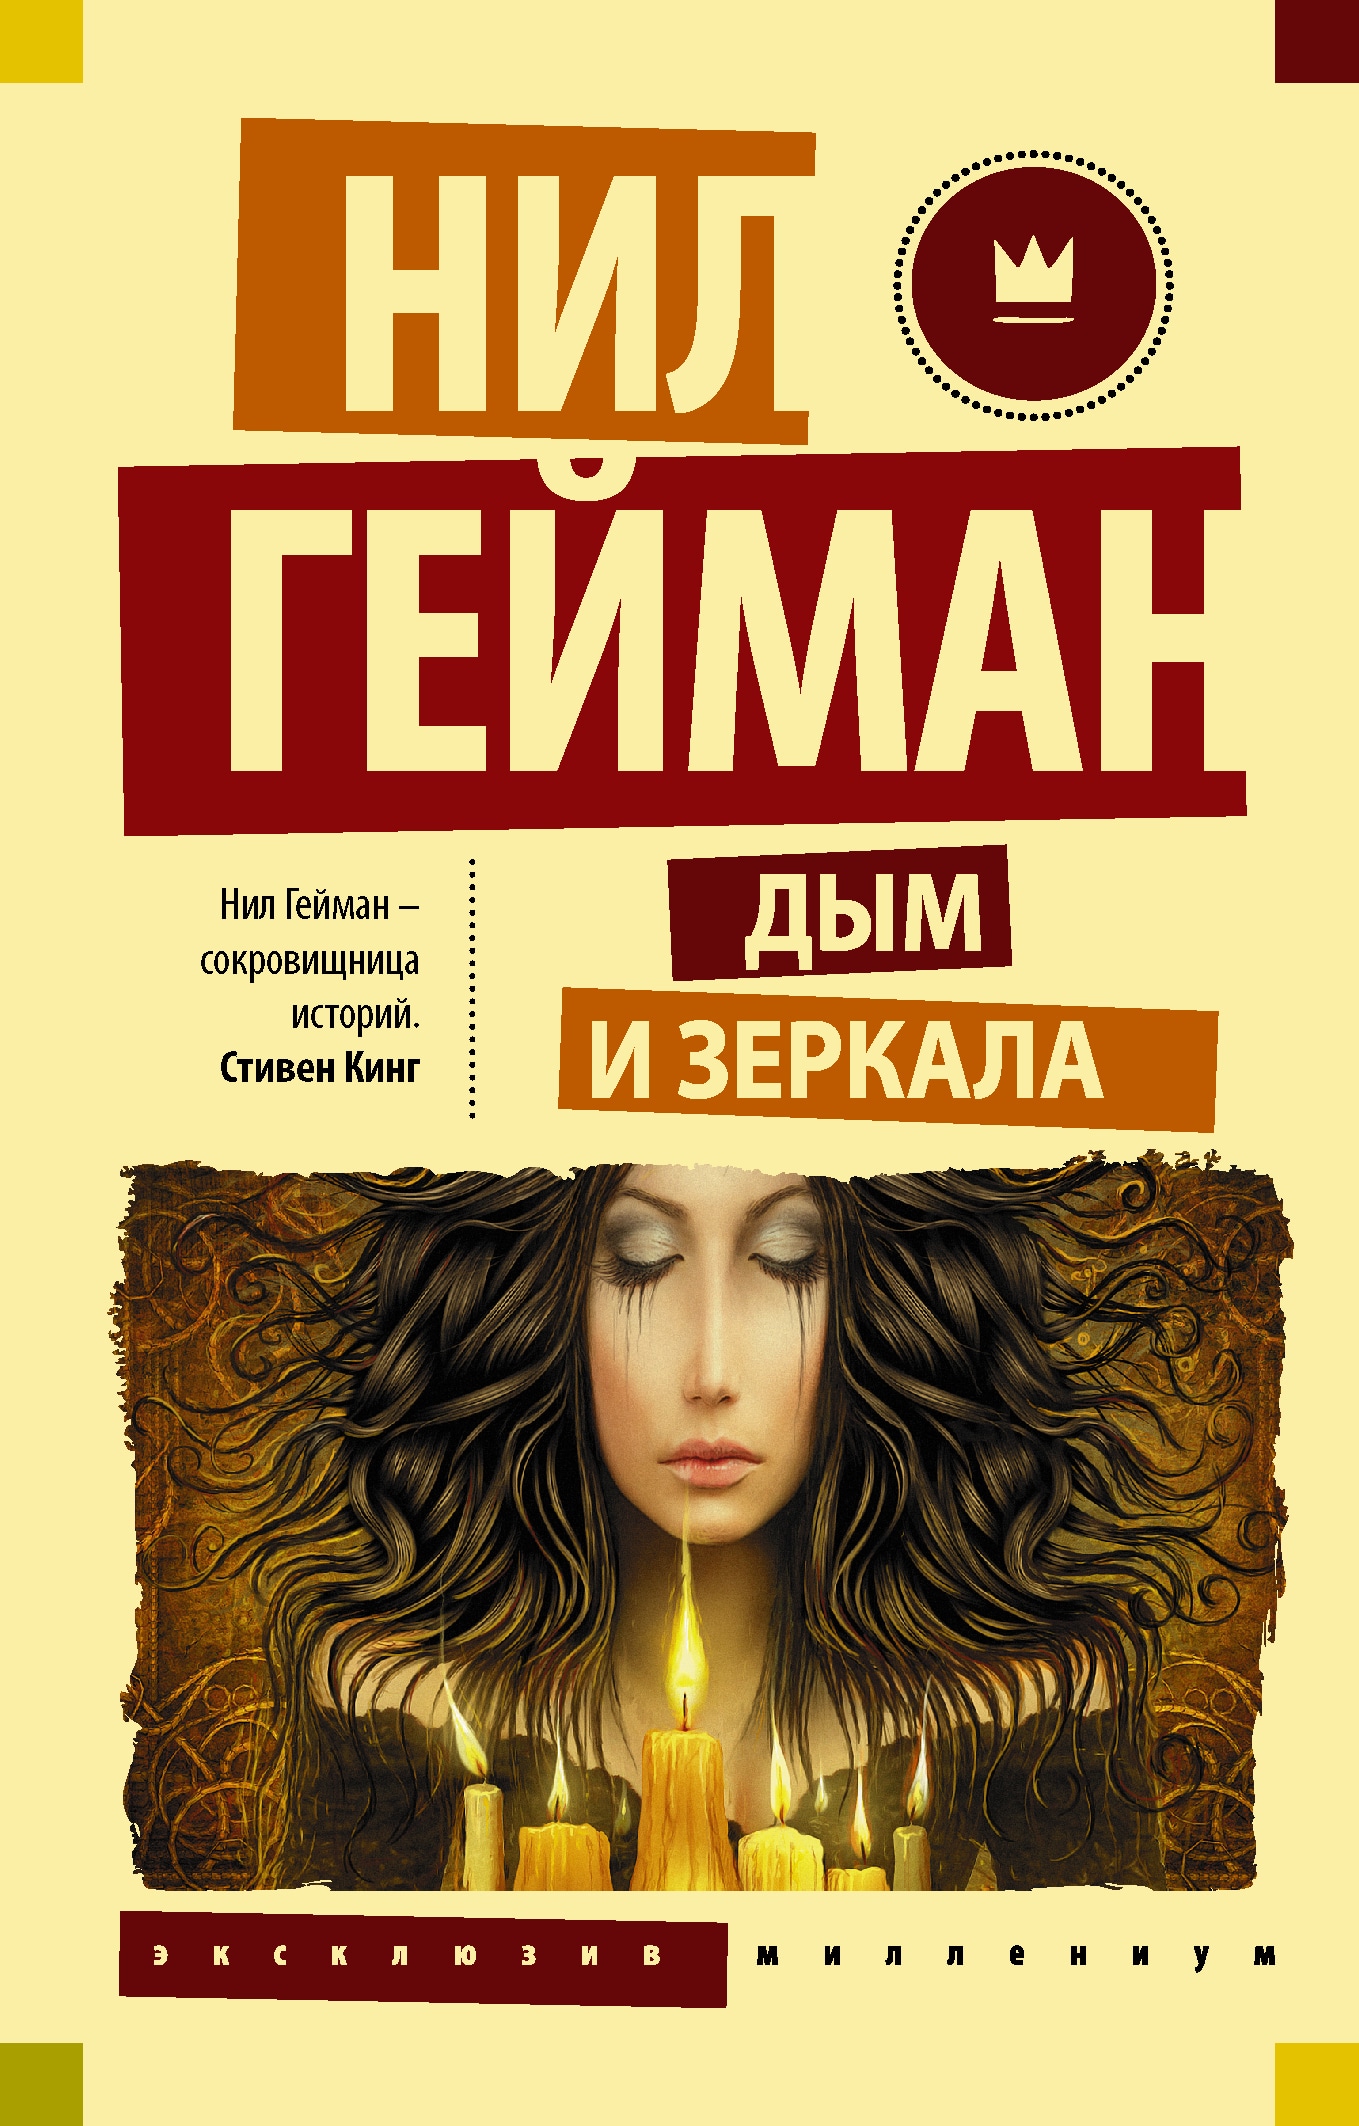 Book “Дым и зеркала” by Нил Гейман — October 17, 2017